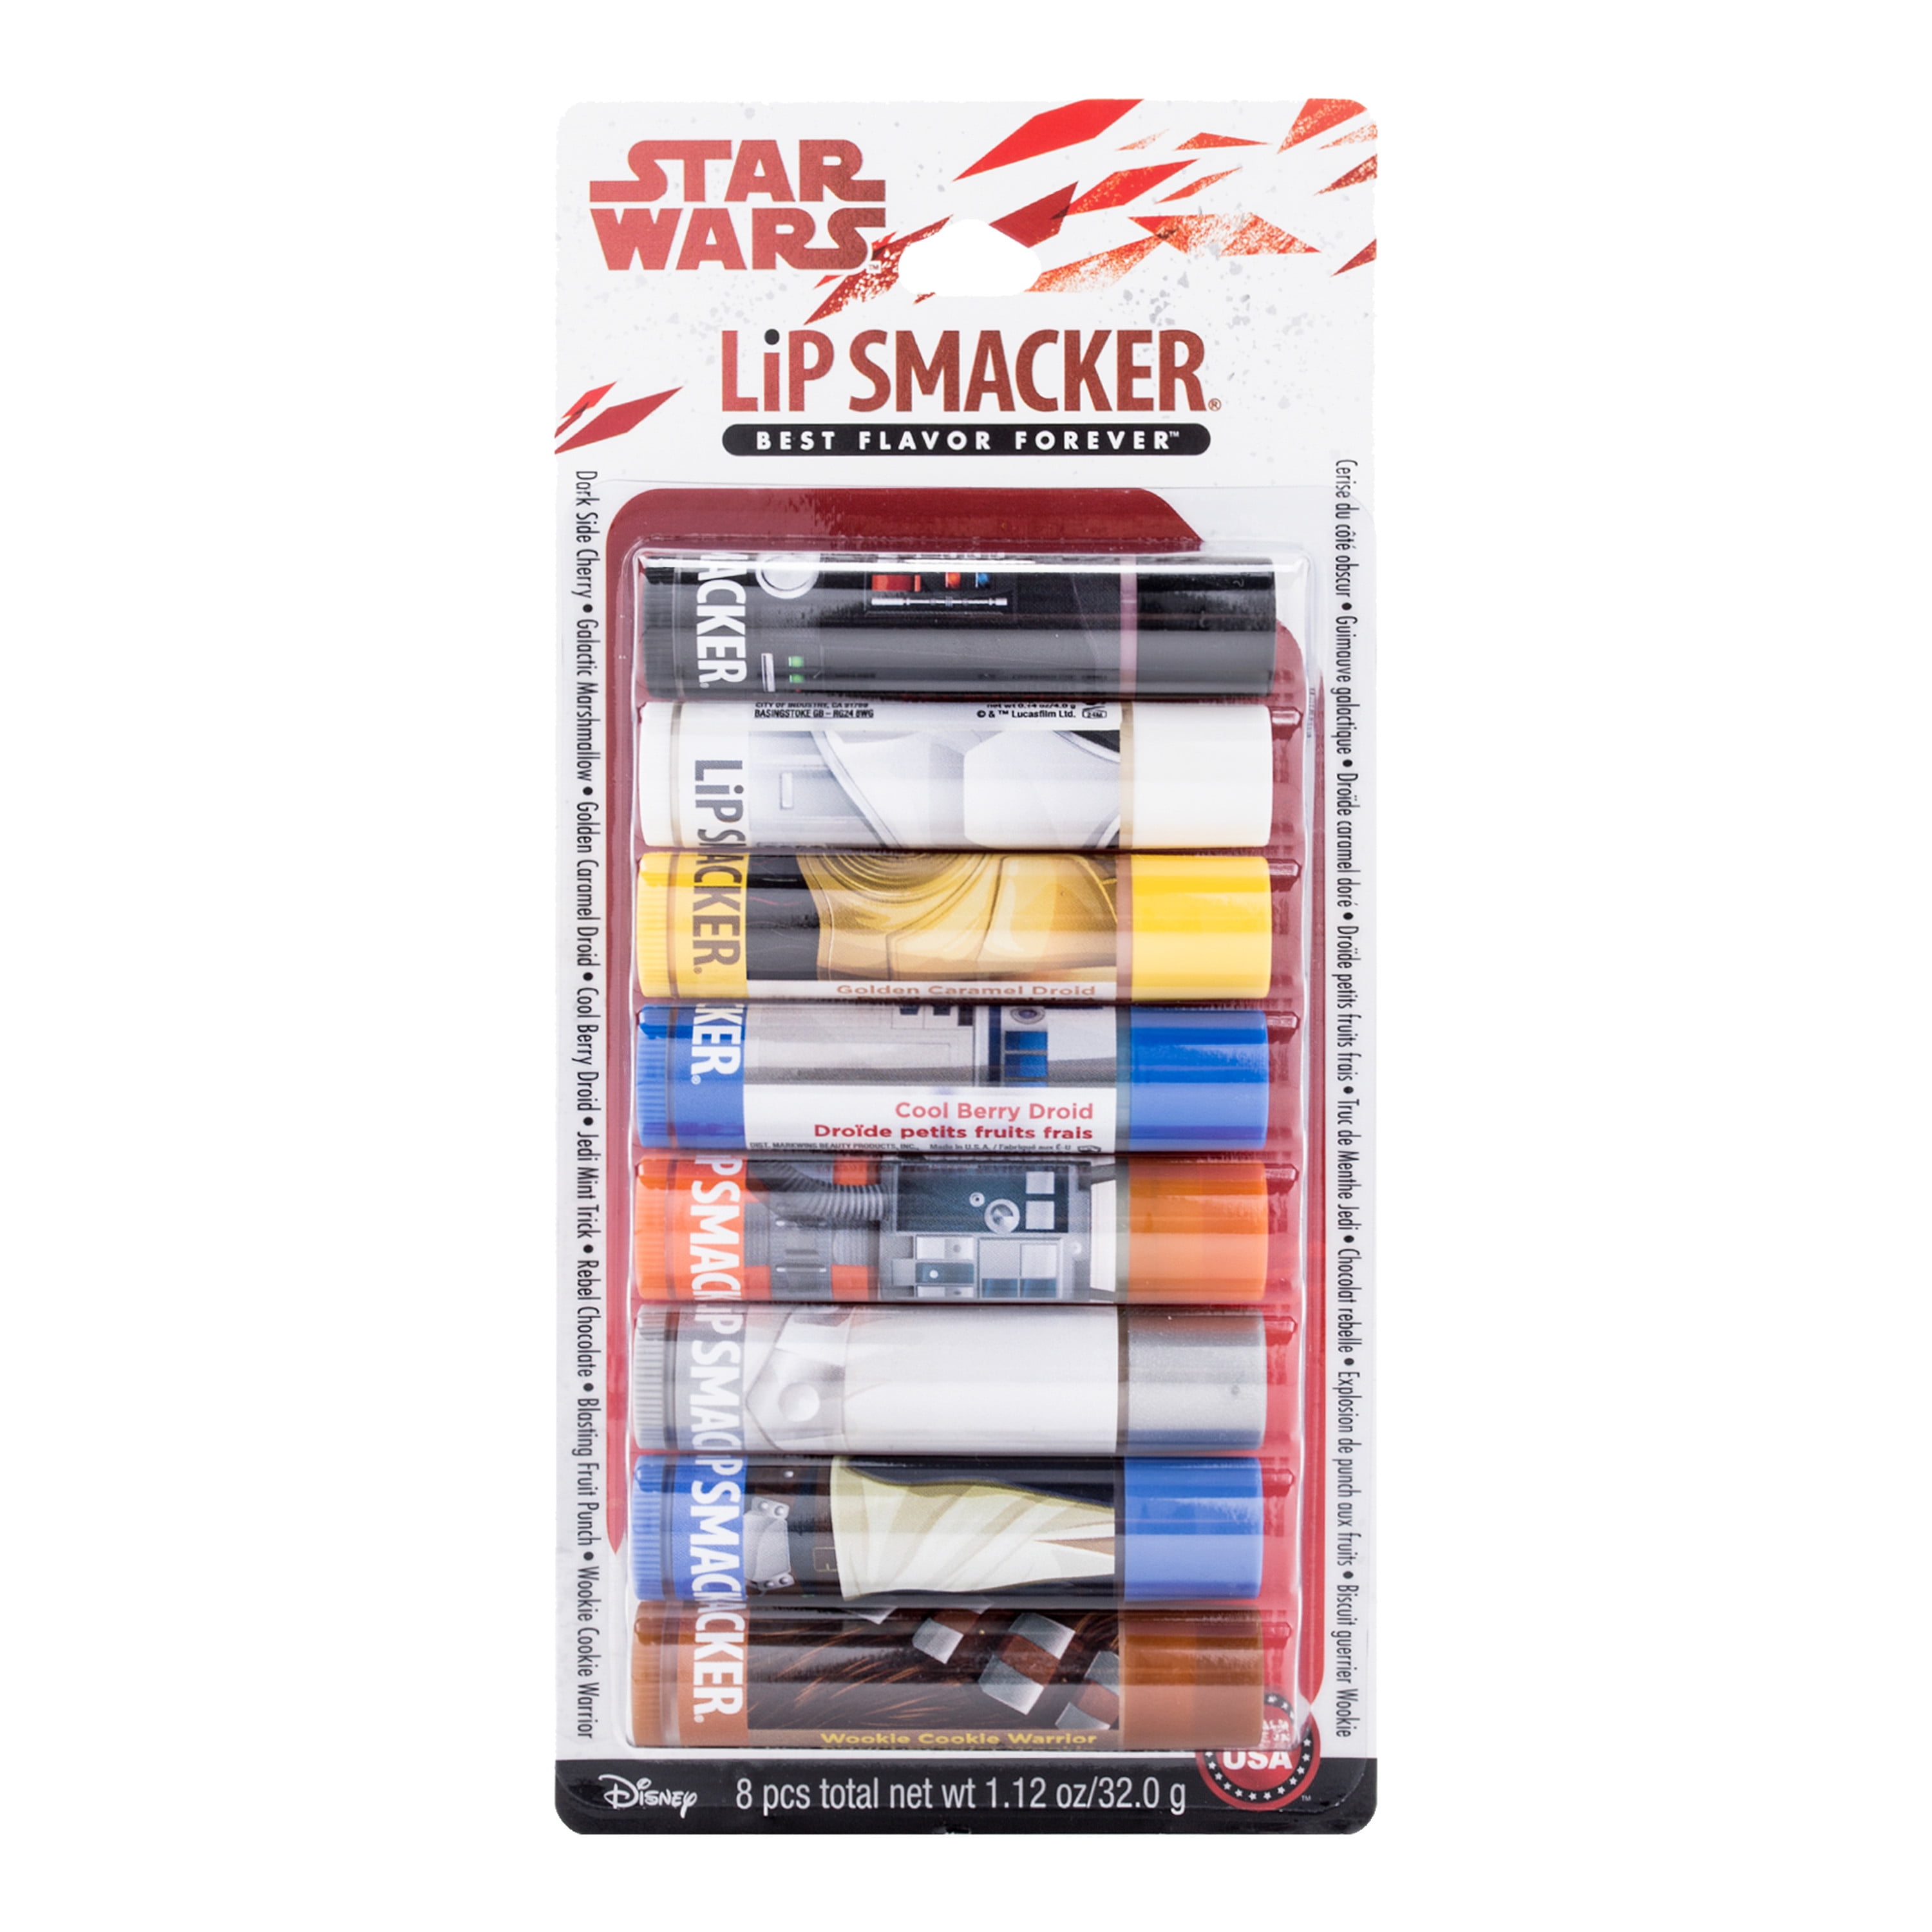 Lip Smacker Lip Balm Party Pack, Star Wars